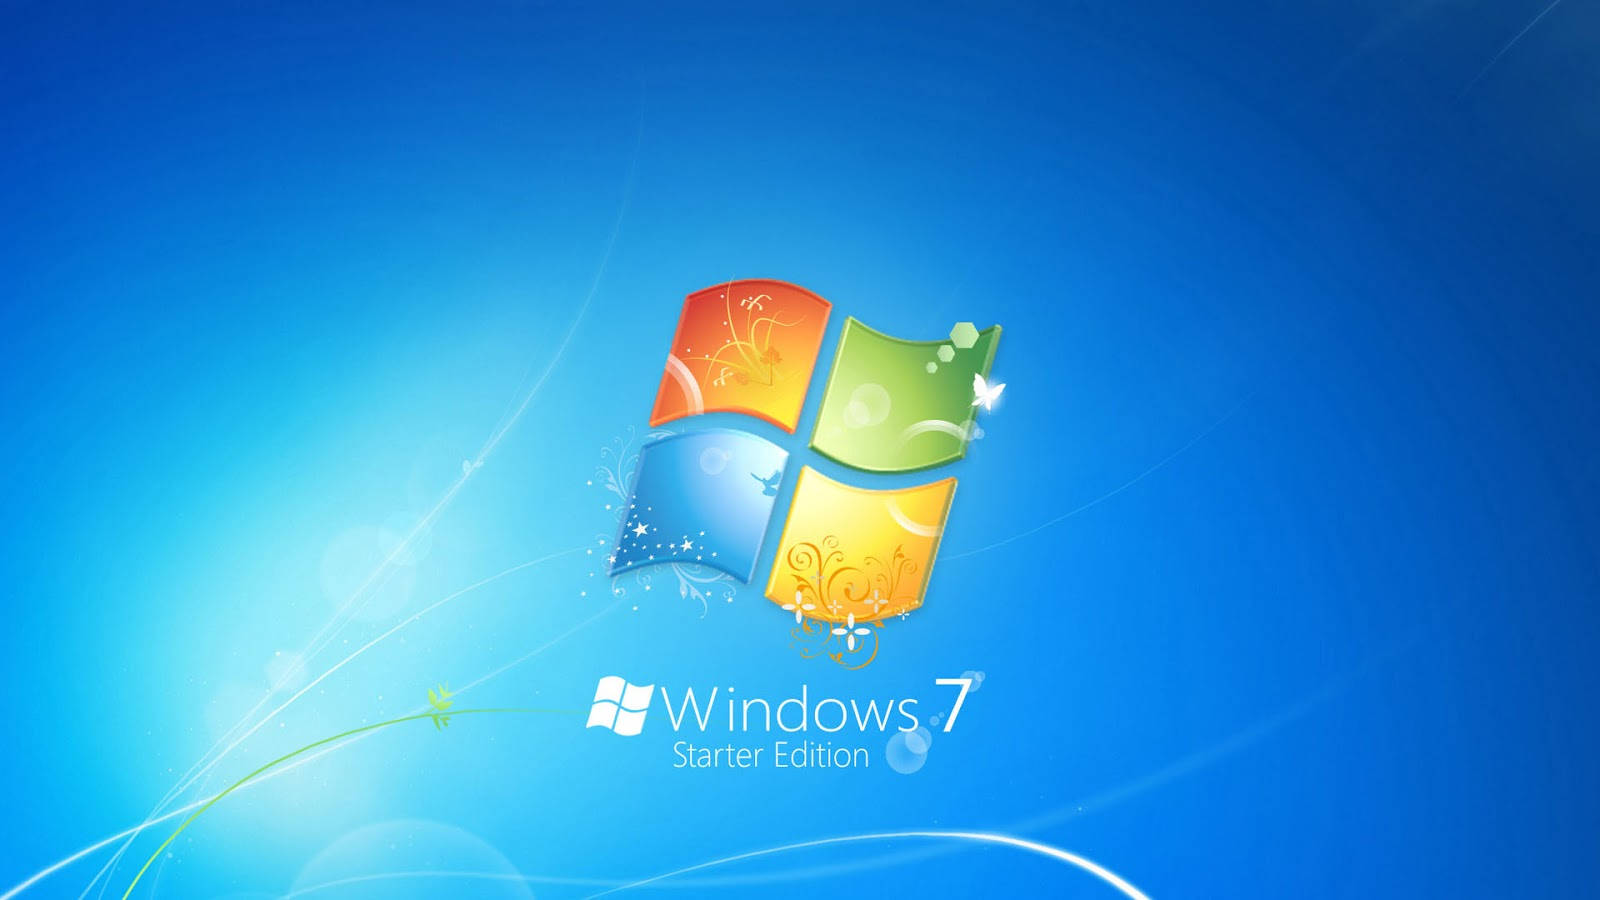 Hd Windows 7 Blue Artistic Screen Wallpaper